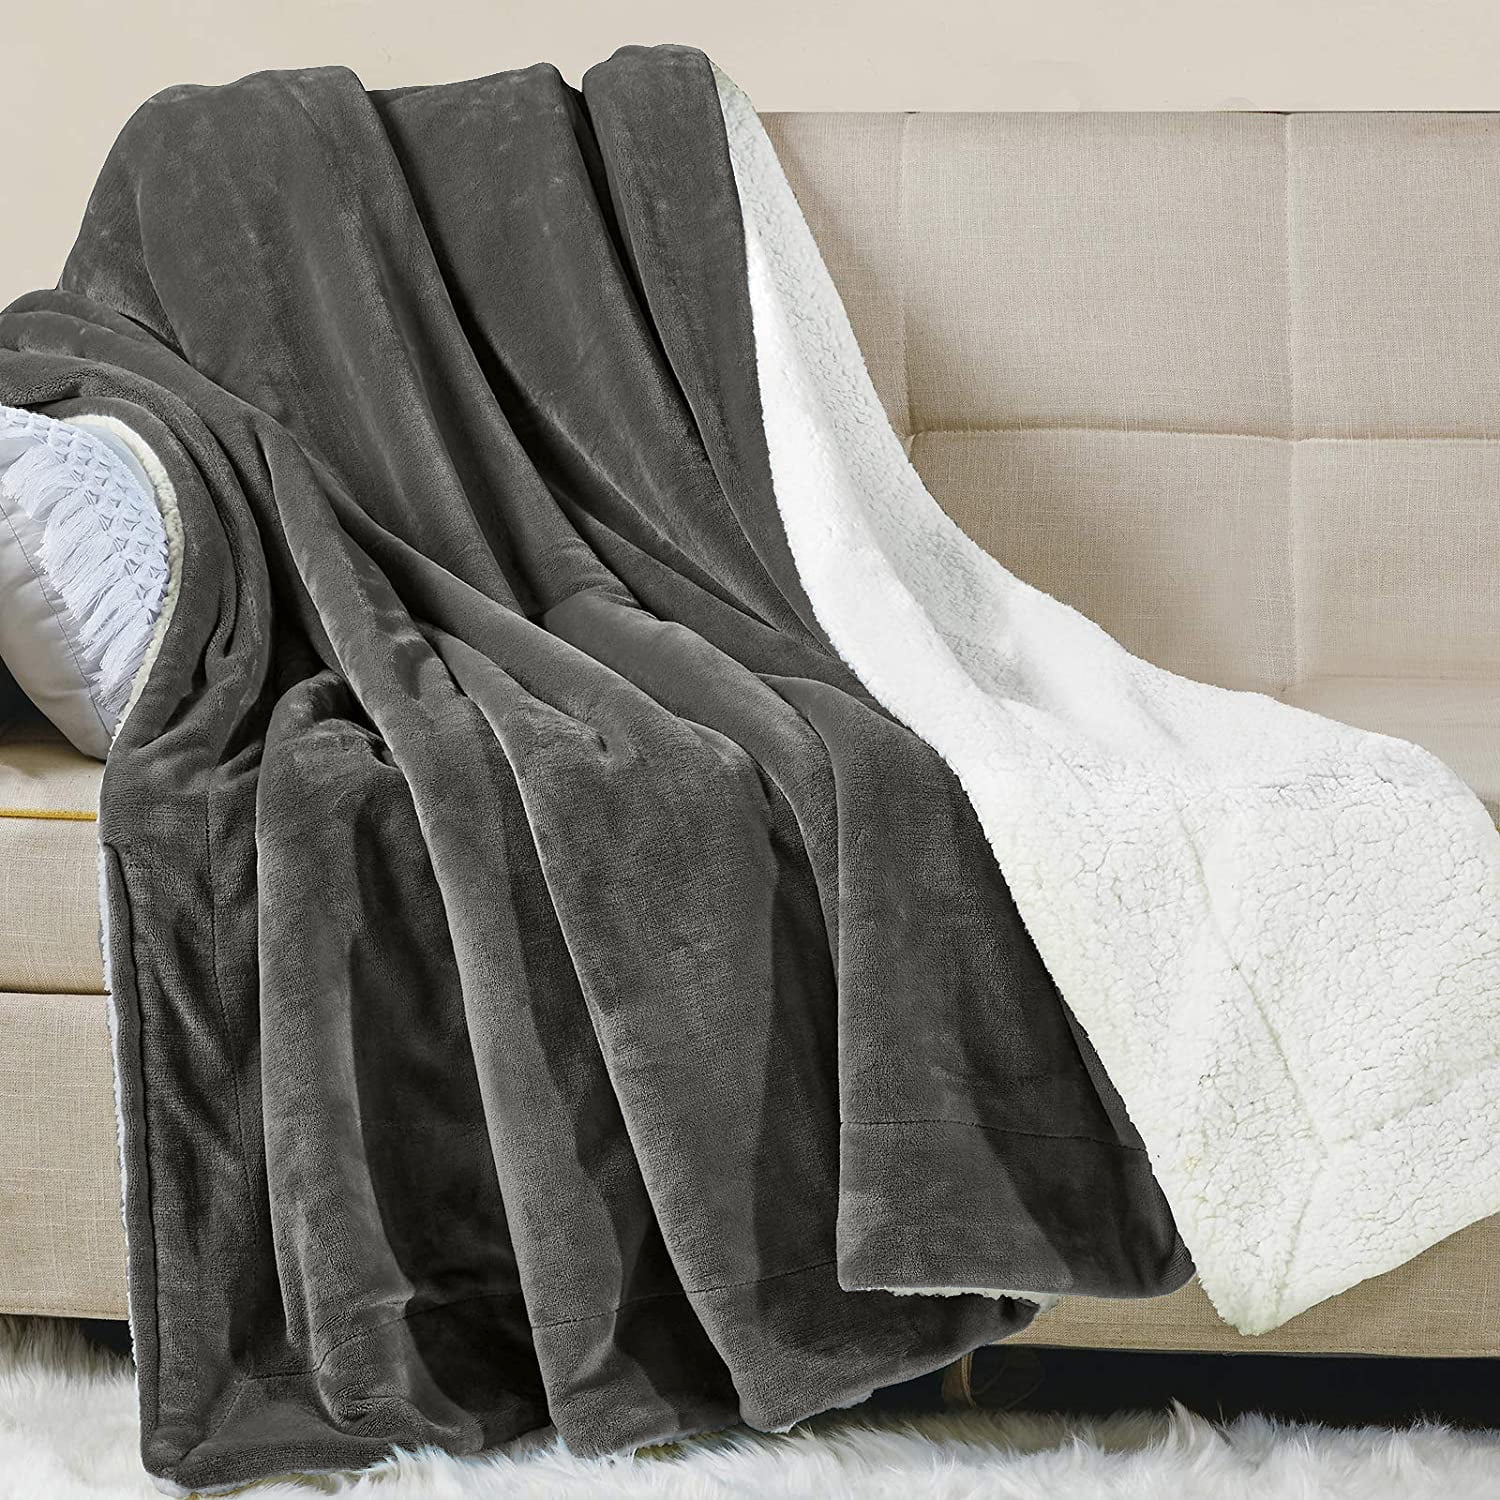 Halloween Pumpkin Sherpa Fleece Blanket,Soft Cozy Warm Fluffy Throw Blanket 49x79in EZON-CH Fleece Throw Blankets Plush Couch Blanket Decorative Throw for Bed Sofa